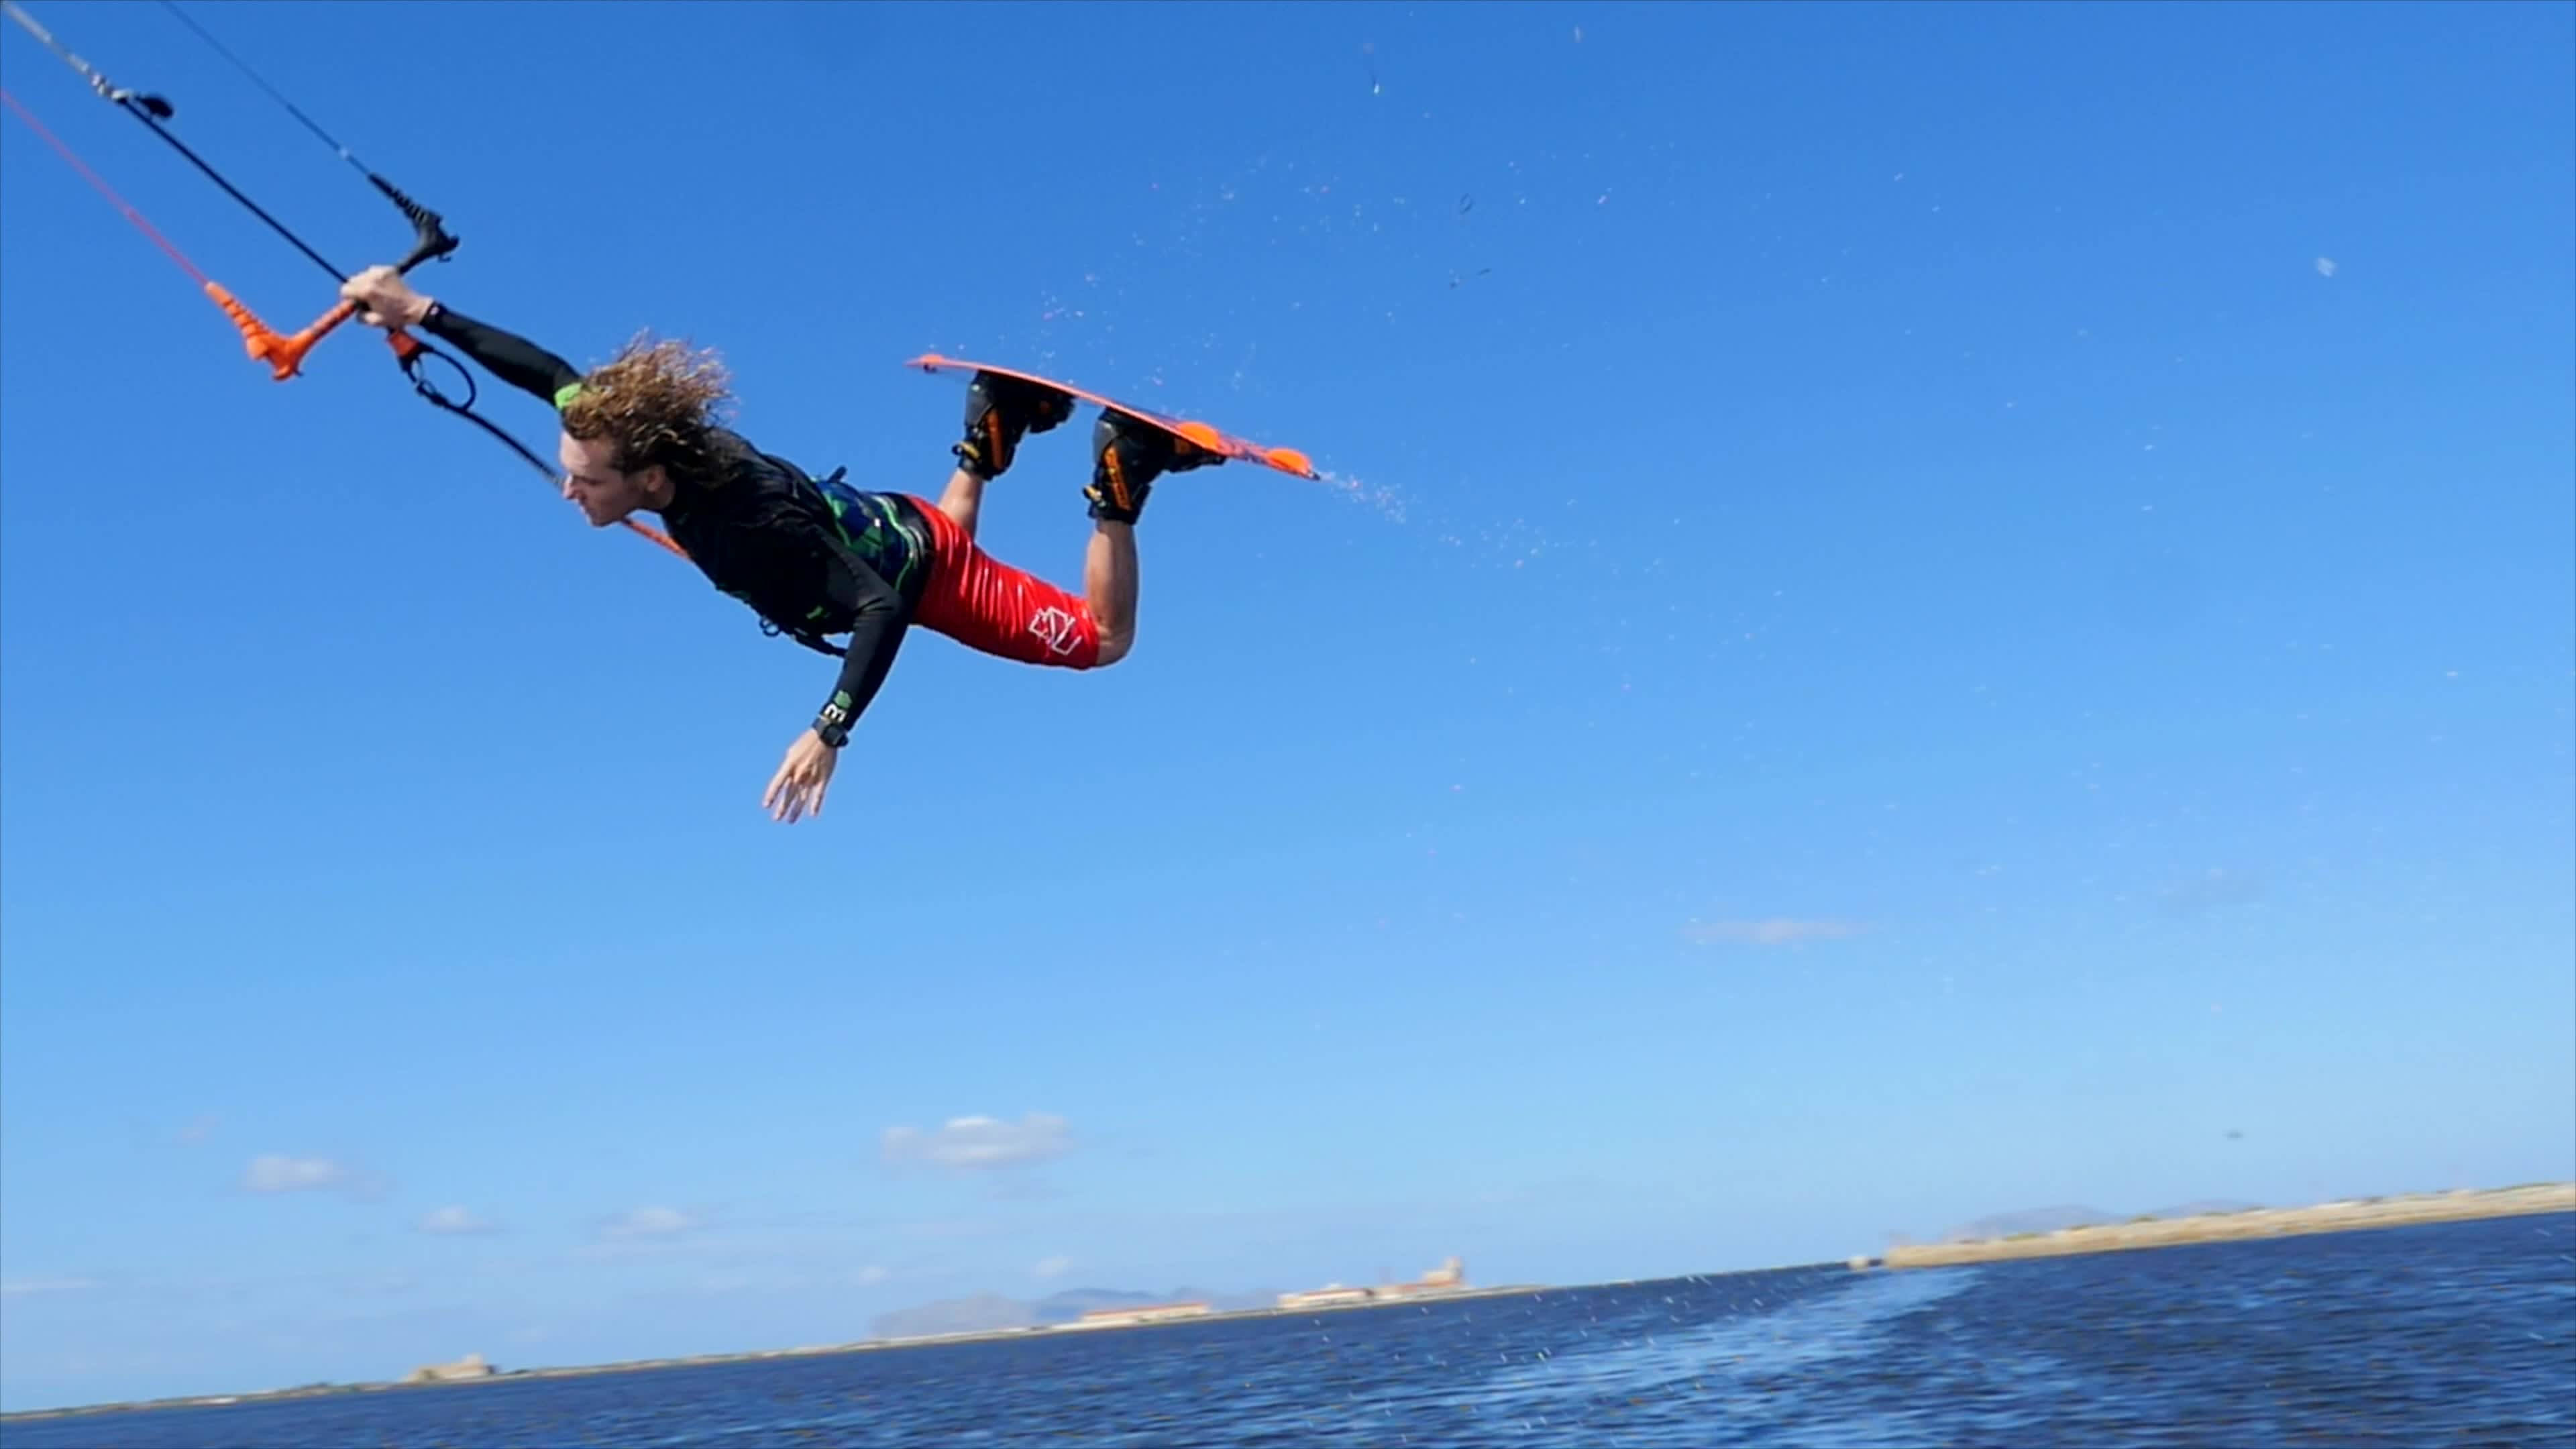 Kiteboarding: Jumping trick, A kite board, Evolution freeride kiteboarder, IKO. 3840x2160 4K Wallpaper.